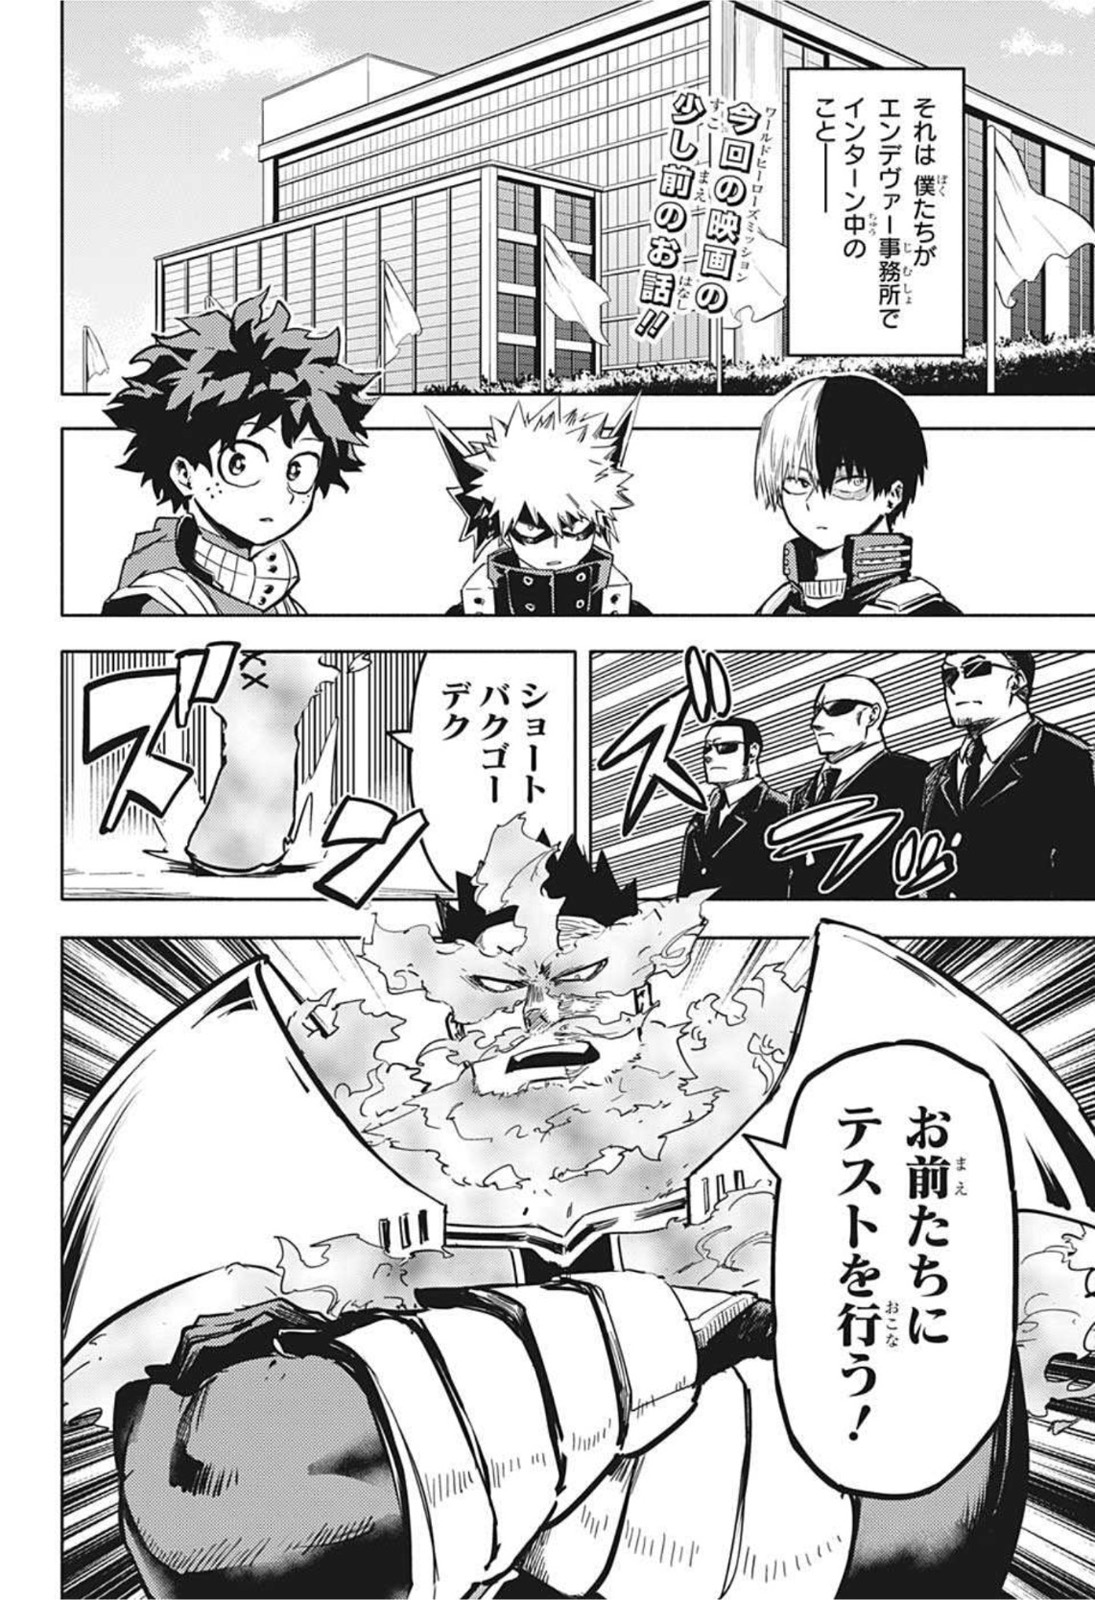 Boku no Hero Academia - Chapter 321.5 - Page 2